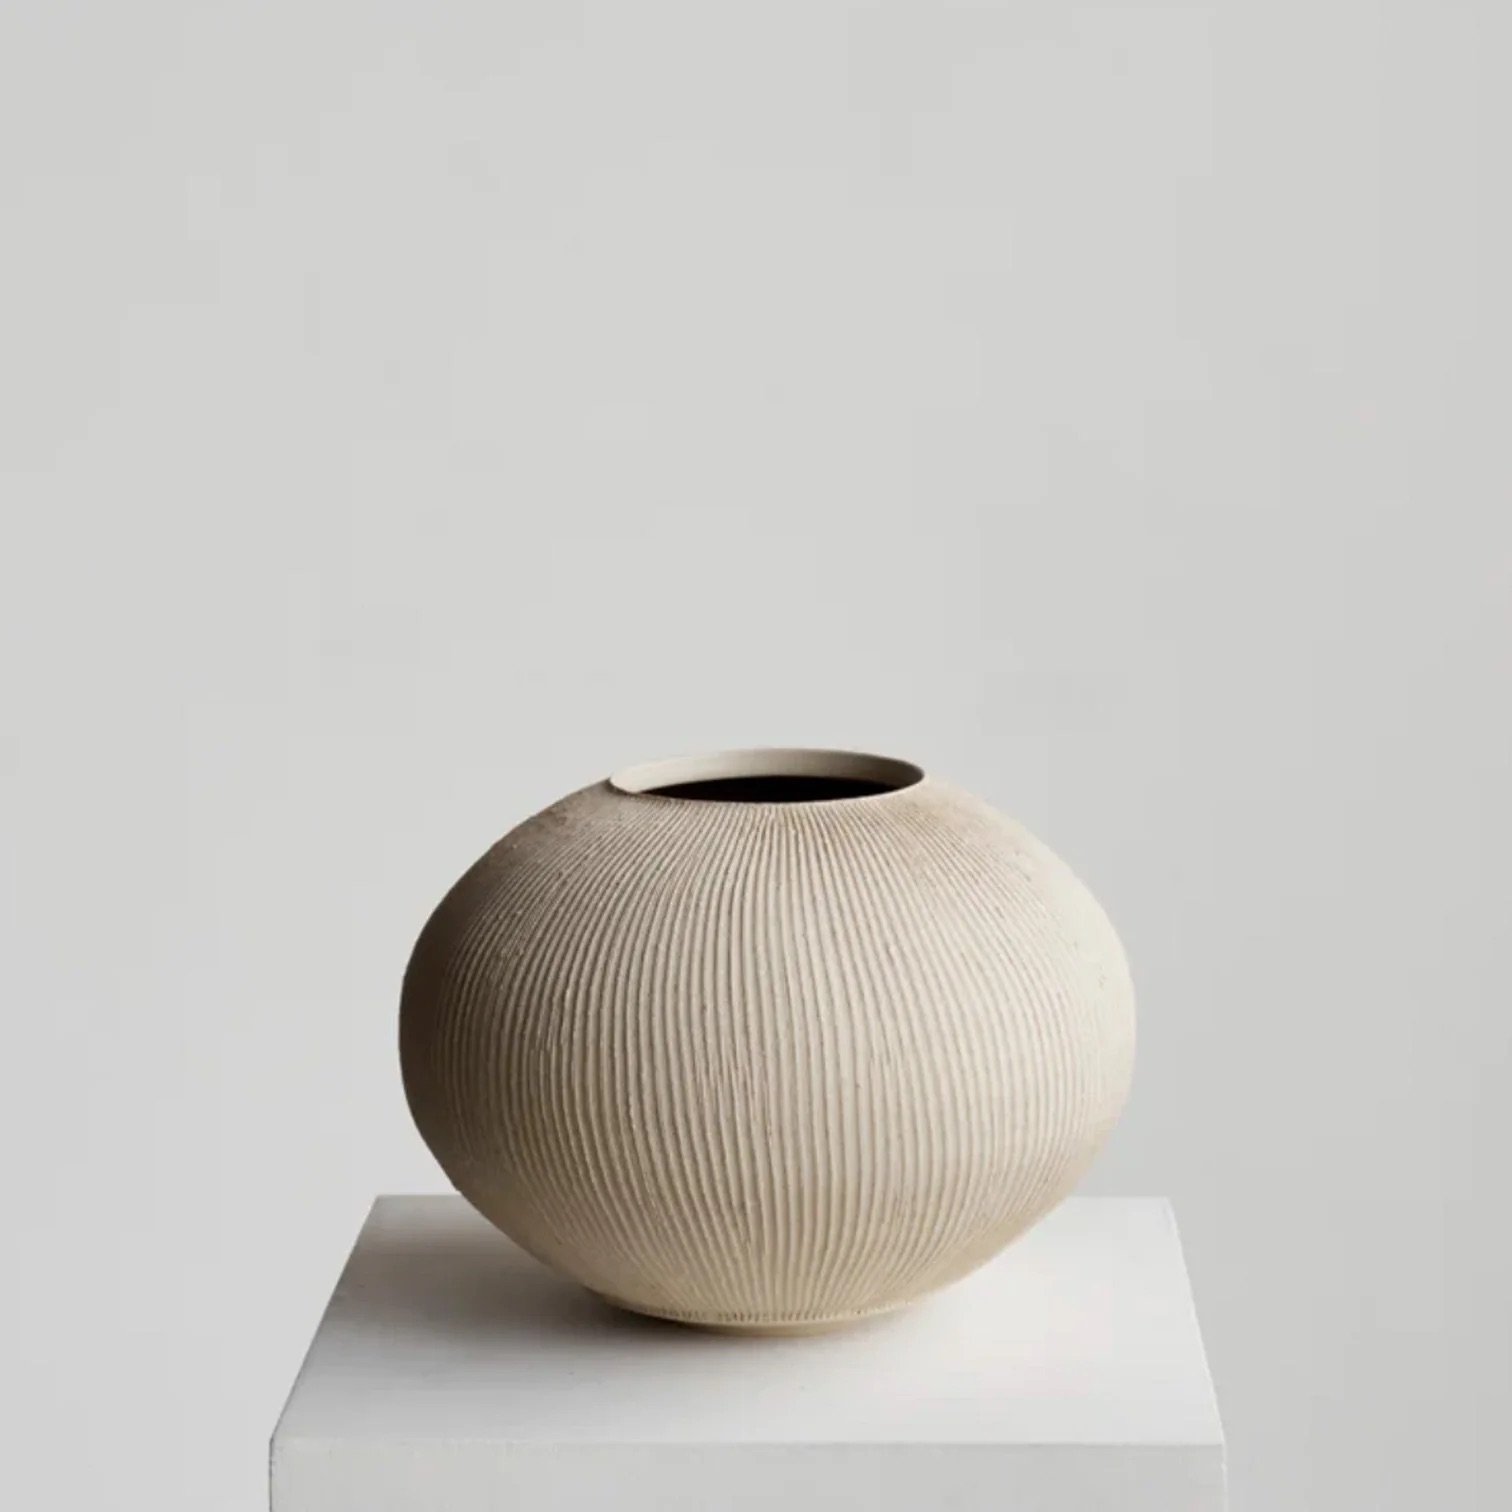 ceramicah-decor-ceramicah-dune-01-vessel-stone-medium-curbside-pick-up-only-39485503766783_1512x.jpeg